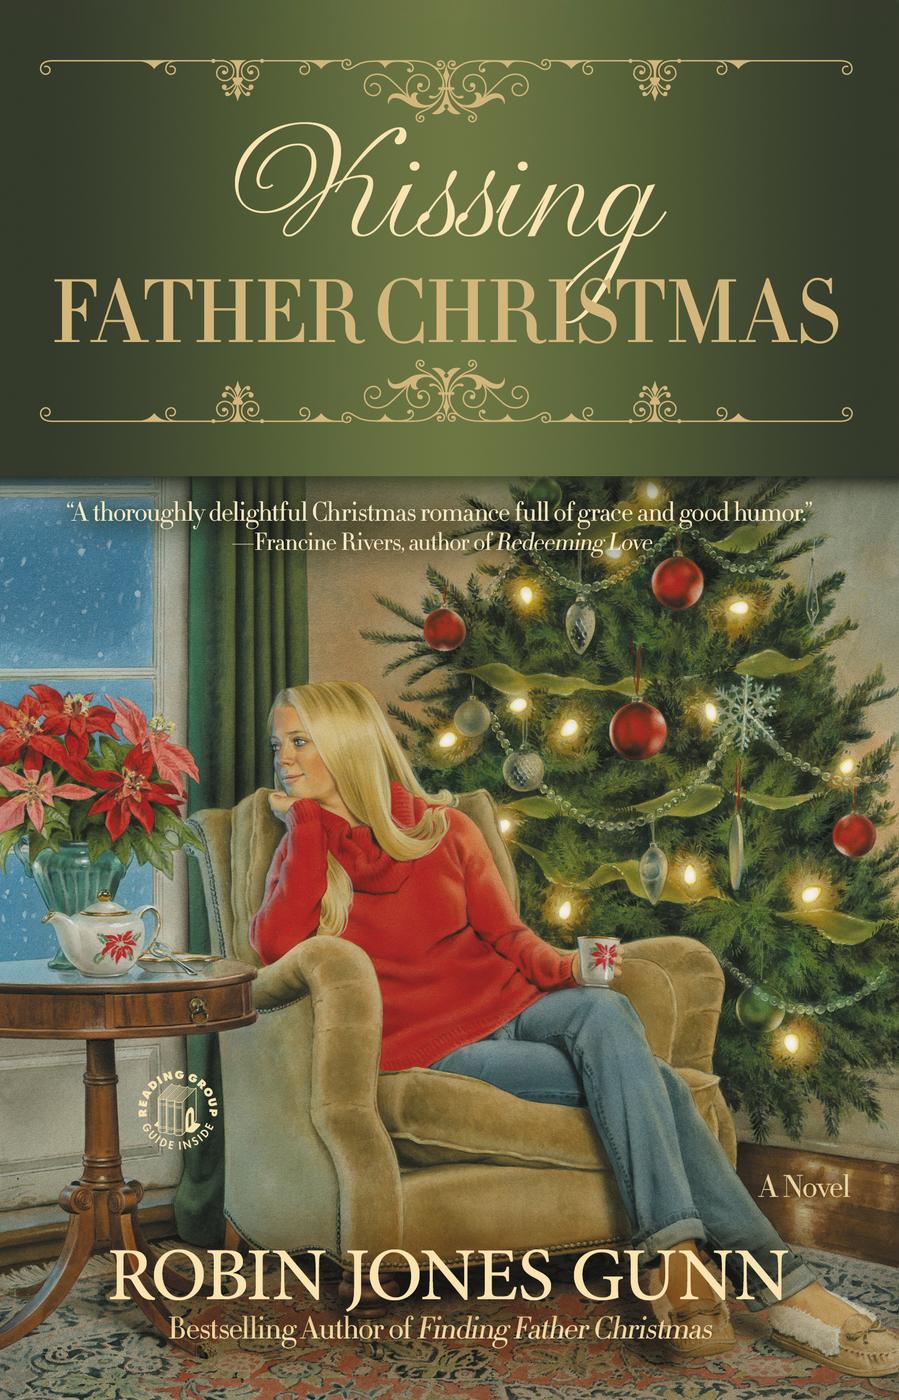 Kissing Father Christmas (2016) by Robin Jones Gunn